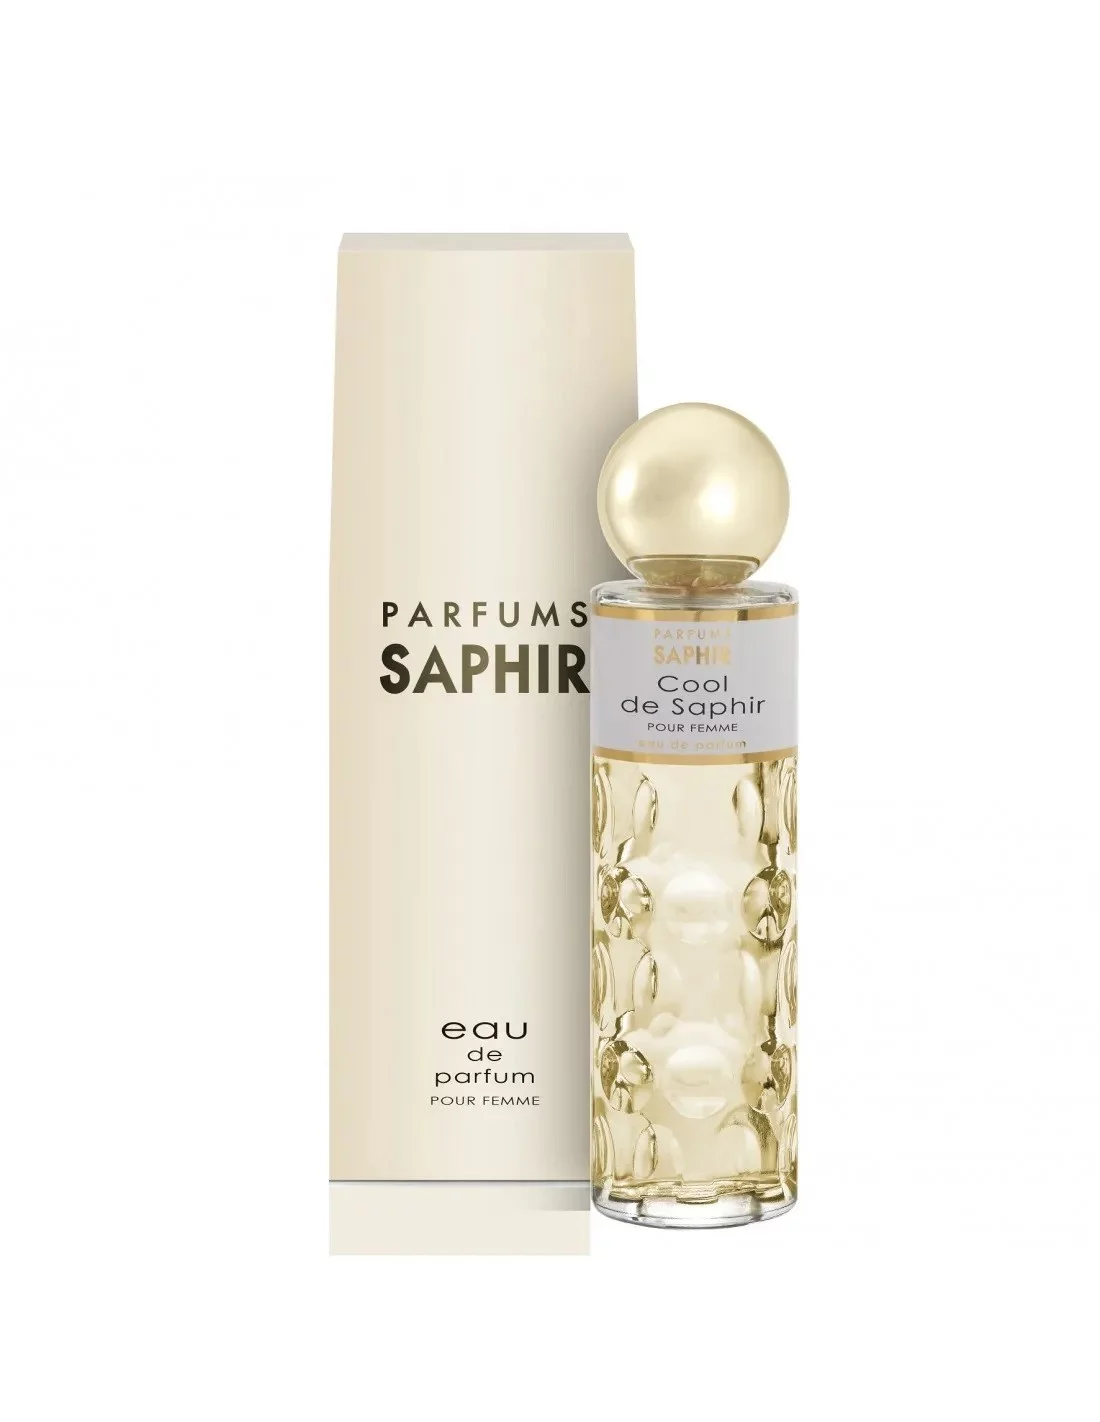 Image of Parfums Saphir - Eau de Parfum 200 ml - cool de saphir